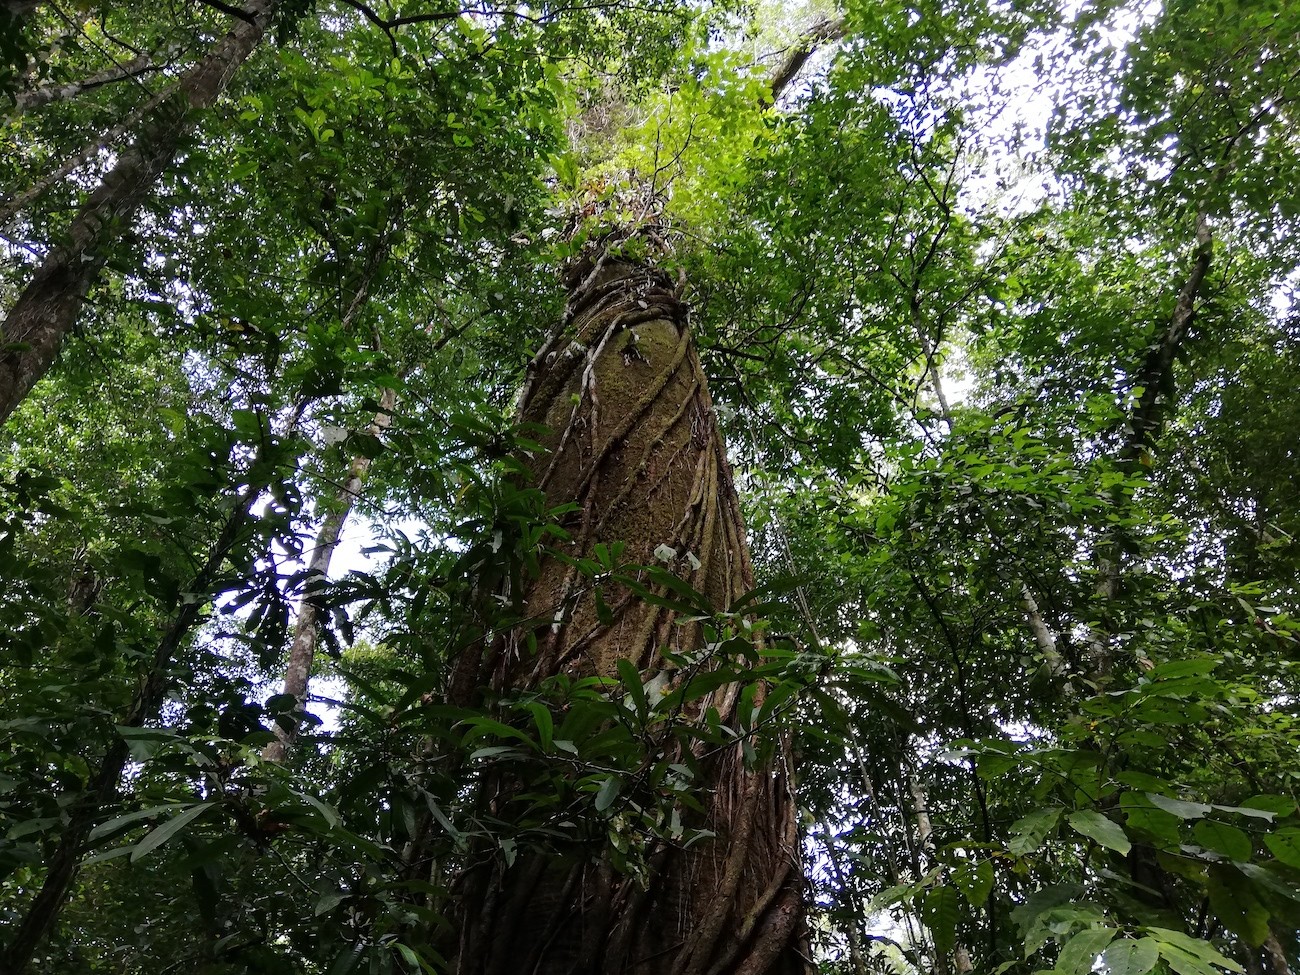 Costa Rica recibirá $60 millones del Banco Mundial para proteger bosques